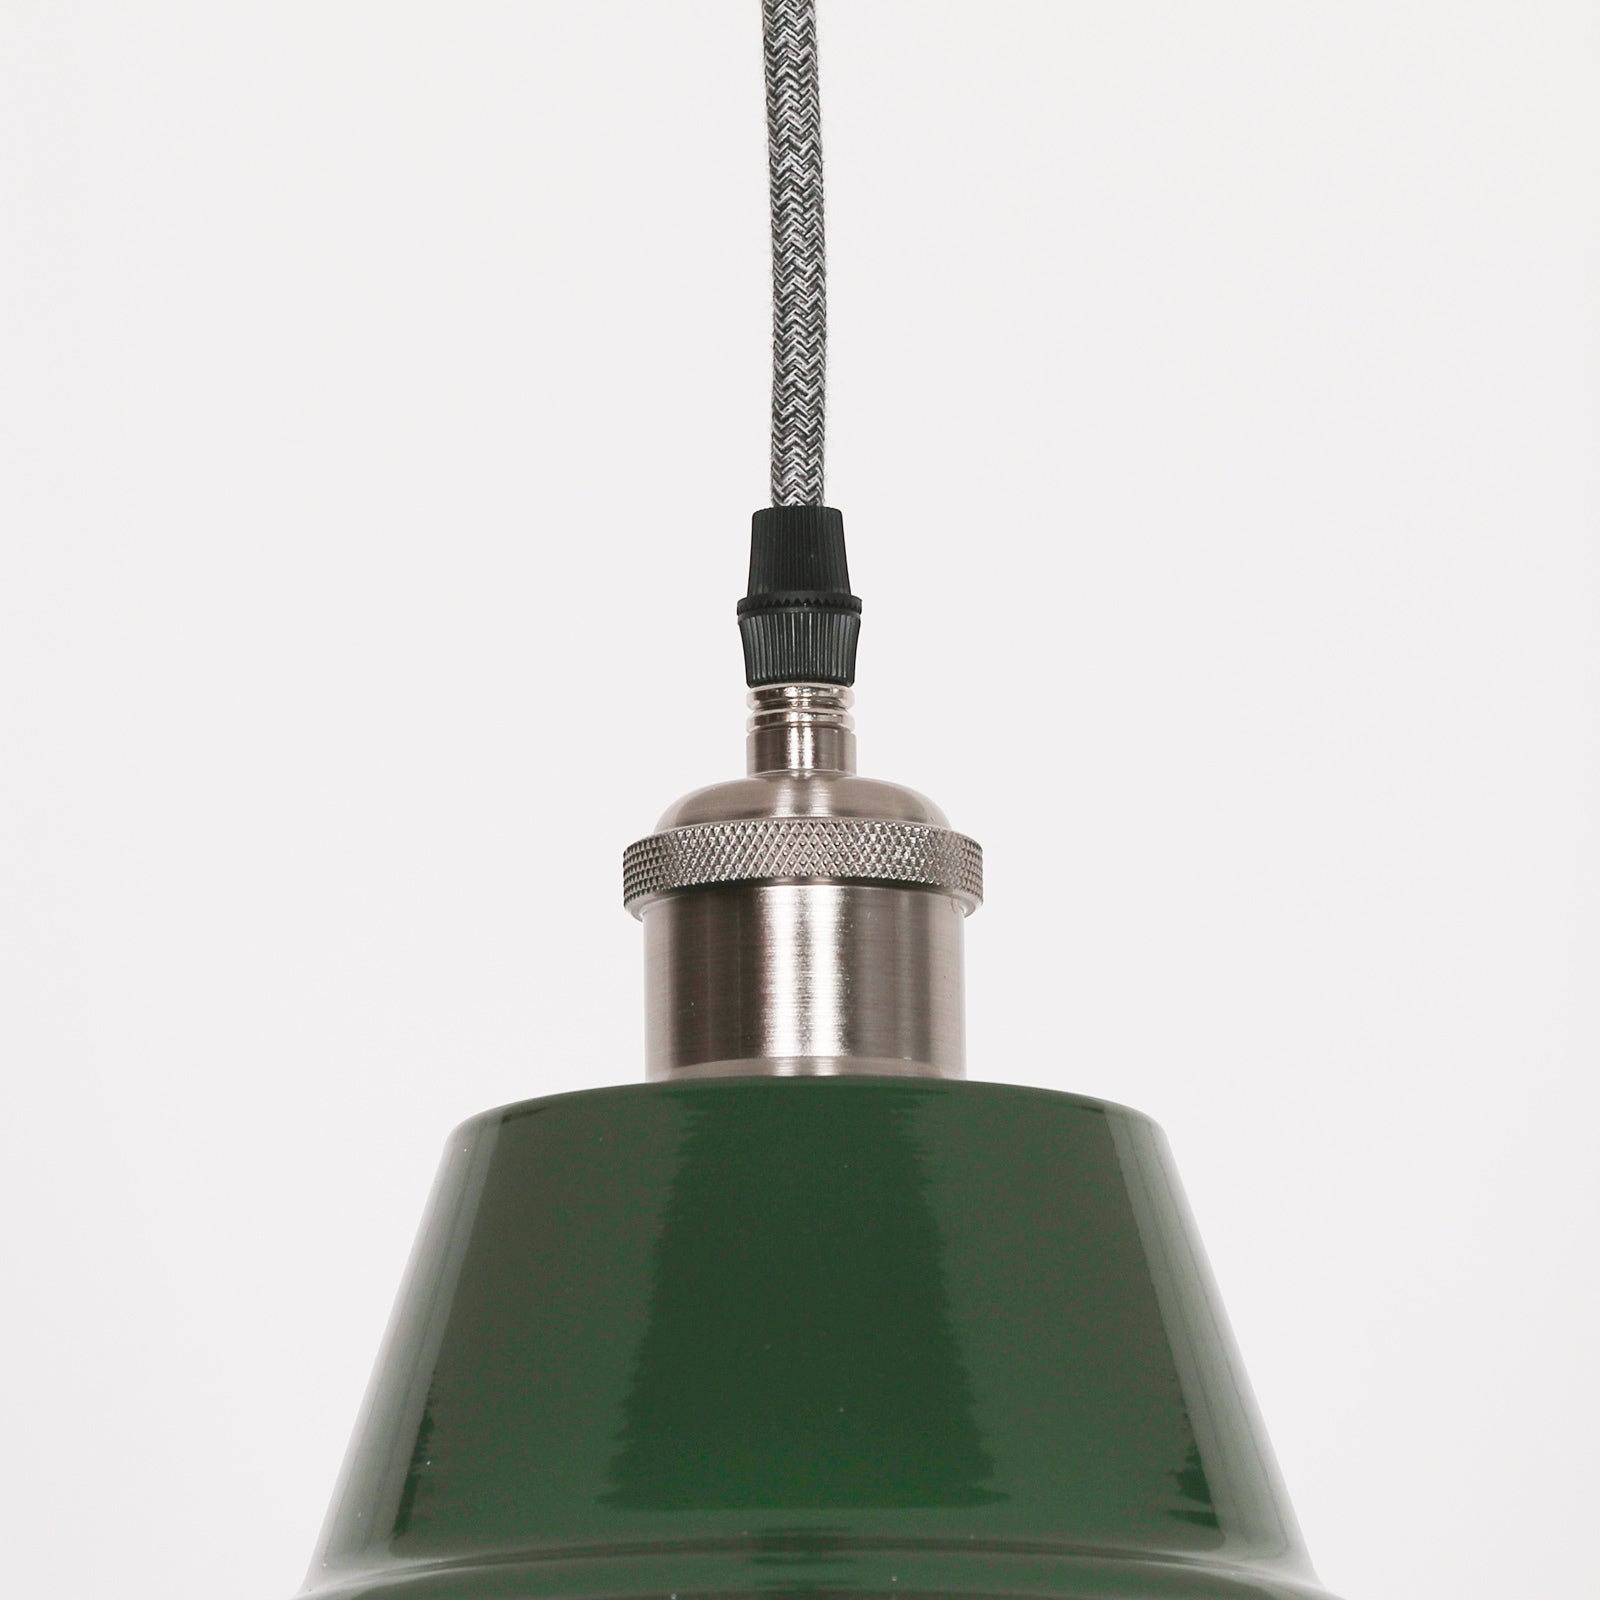 Factory Style British Green Enamel Painted 36cm Pendant Light